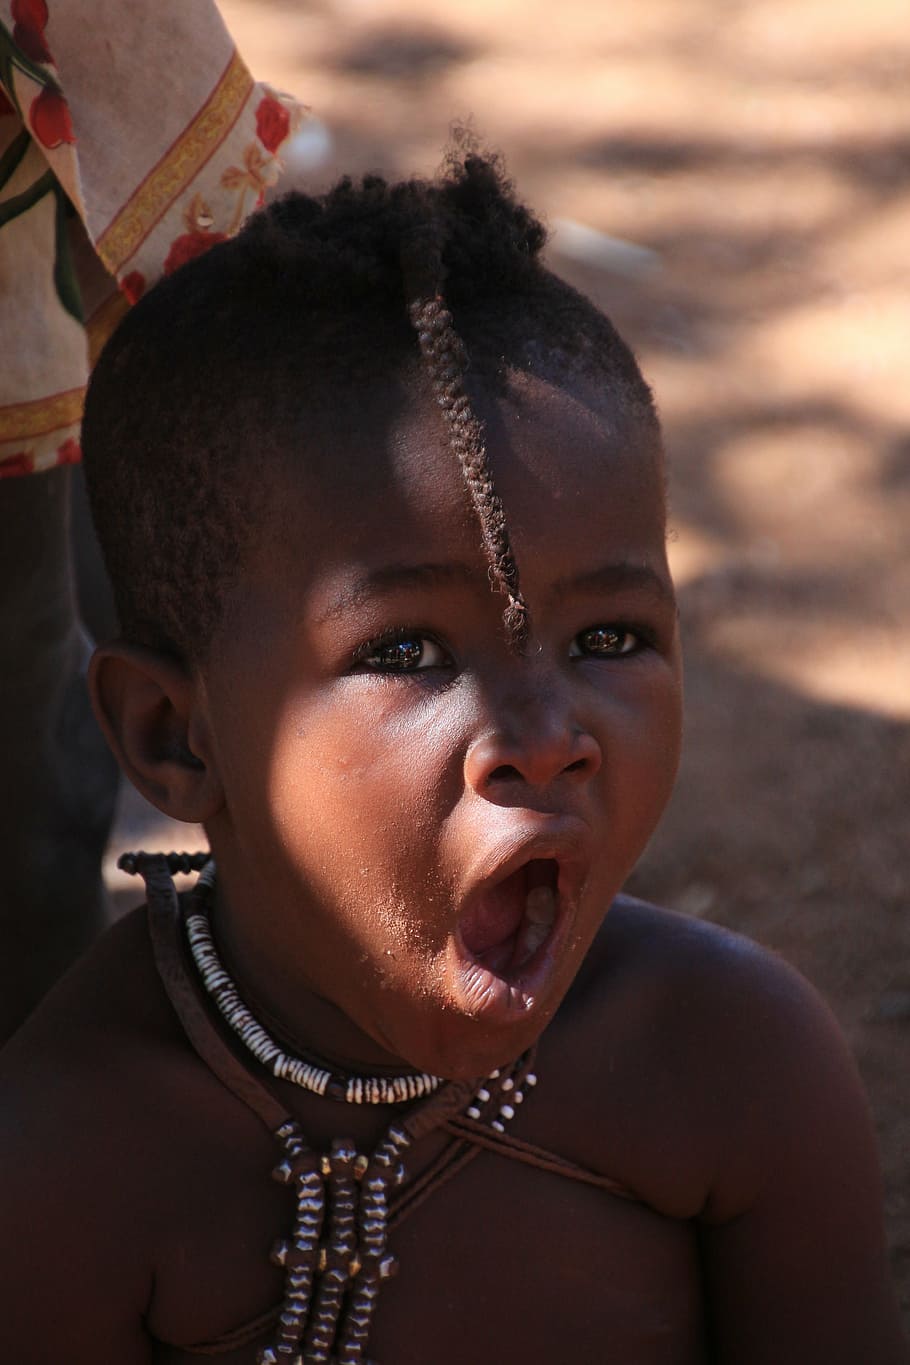 namibia, child, black, color, himba, africa, indigenous, nigeria, sub-saharan africa, portrait